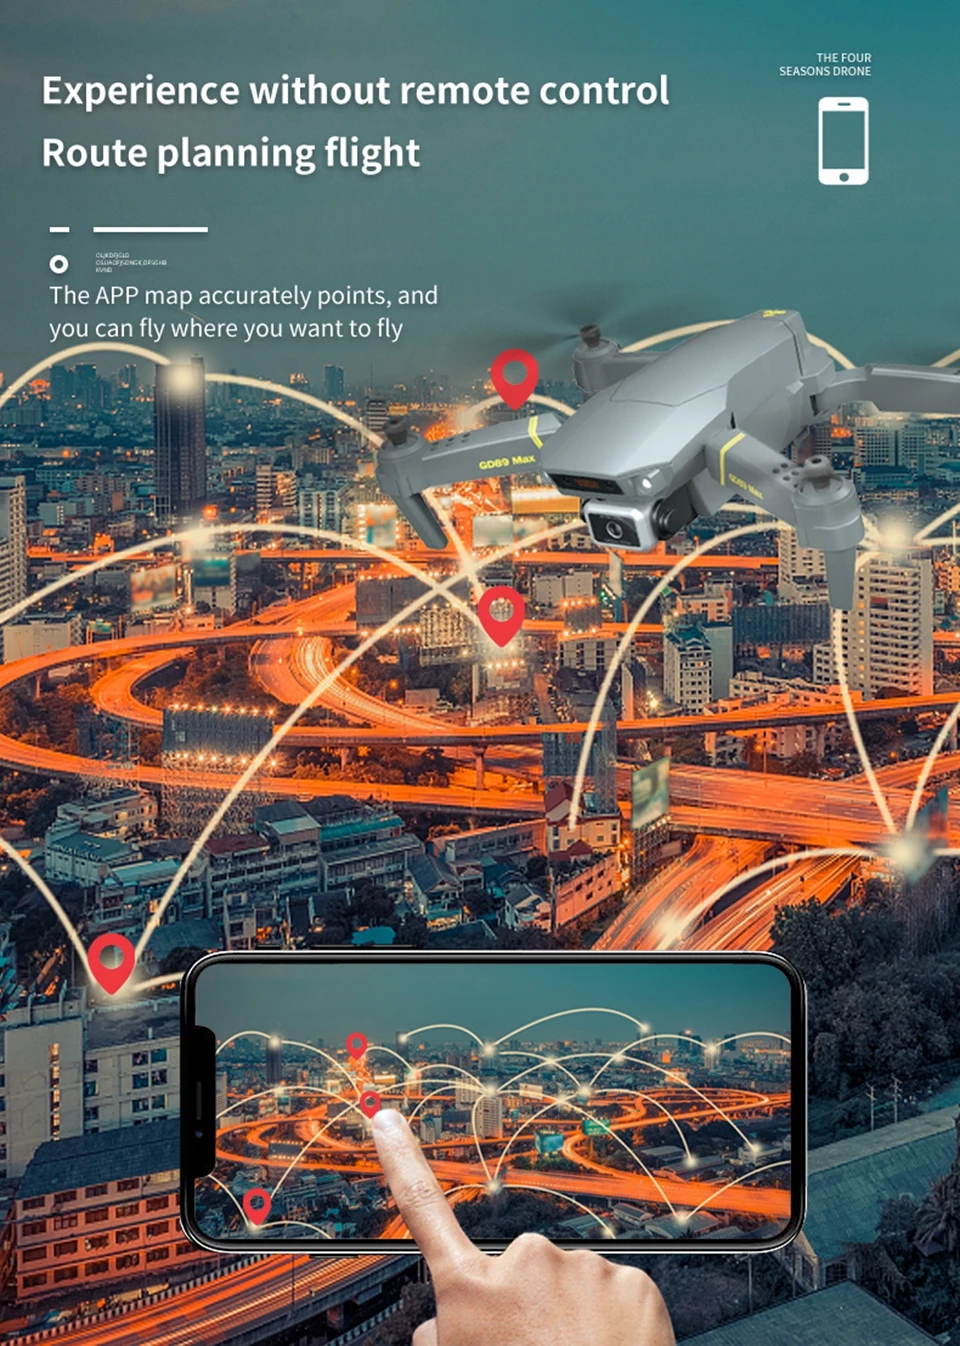 Квадрокоптер (дрон) Global Drone gd89 с камерой WI-Fi FPV — купить в интернет-магазине OZON с быстрой доставкой